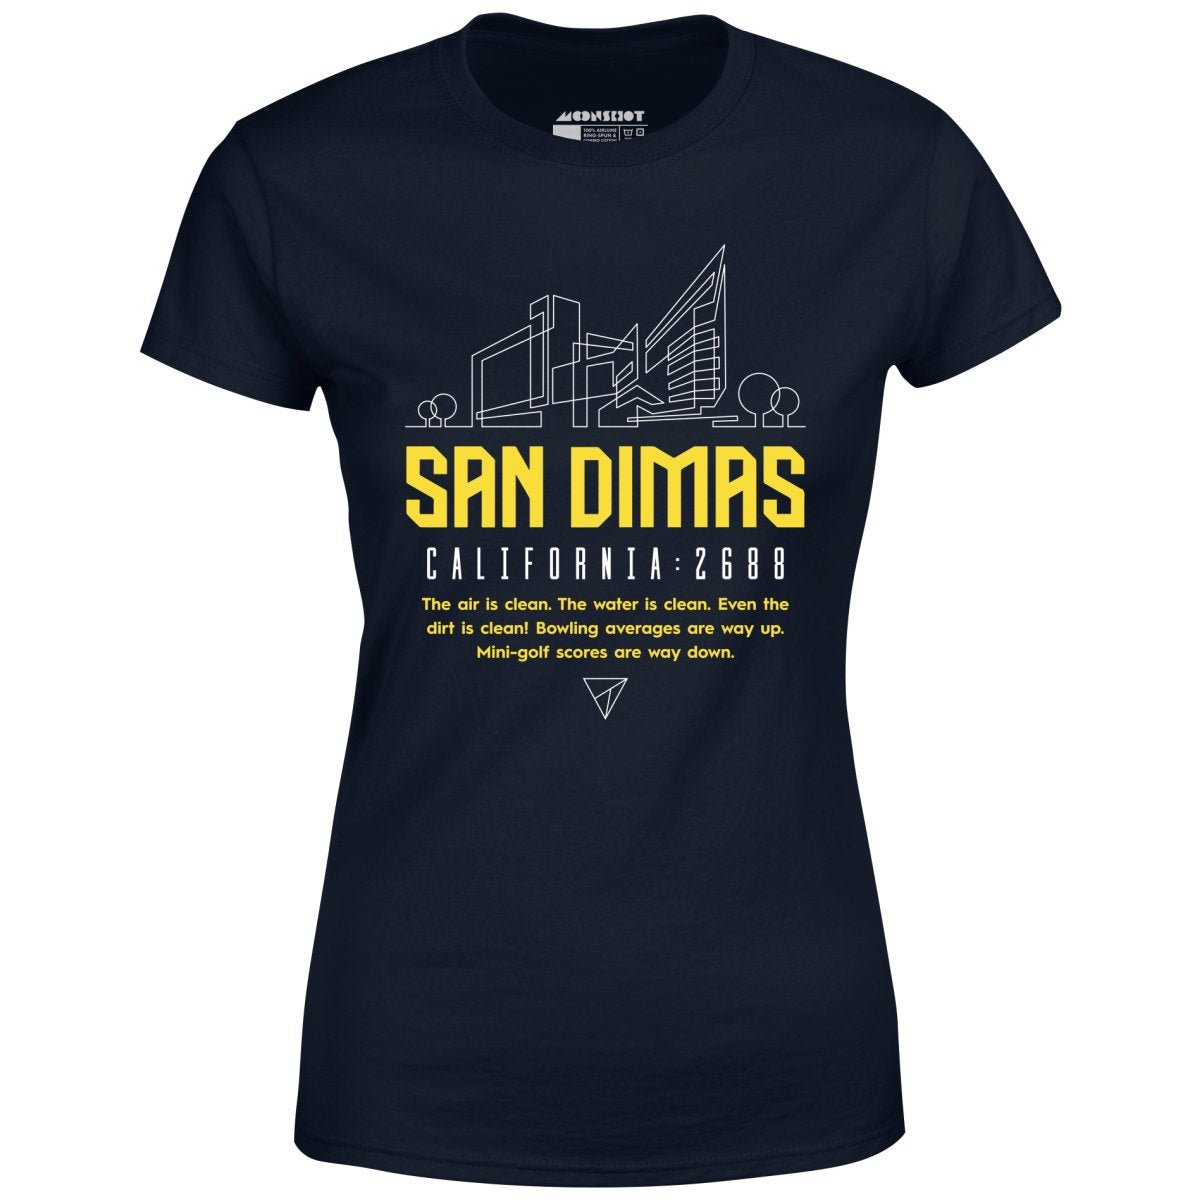 San Dimas 2688 - Bill & Ted's Excellent Adventure - Women's T-Shirt